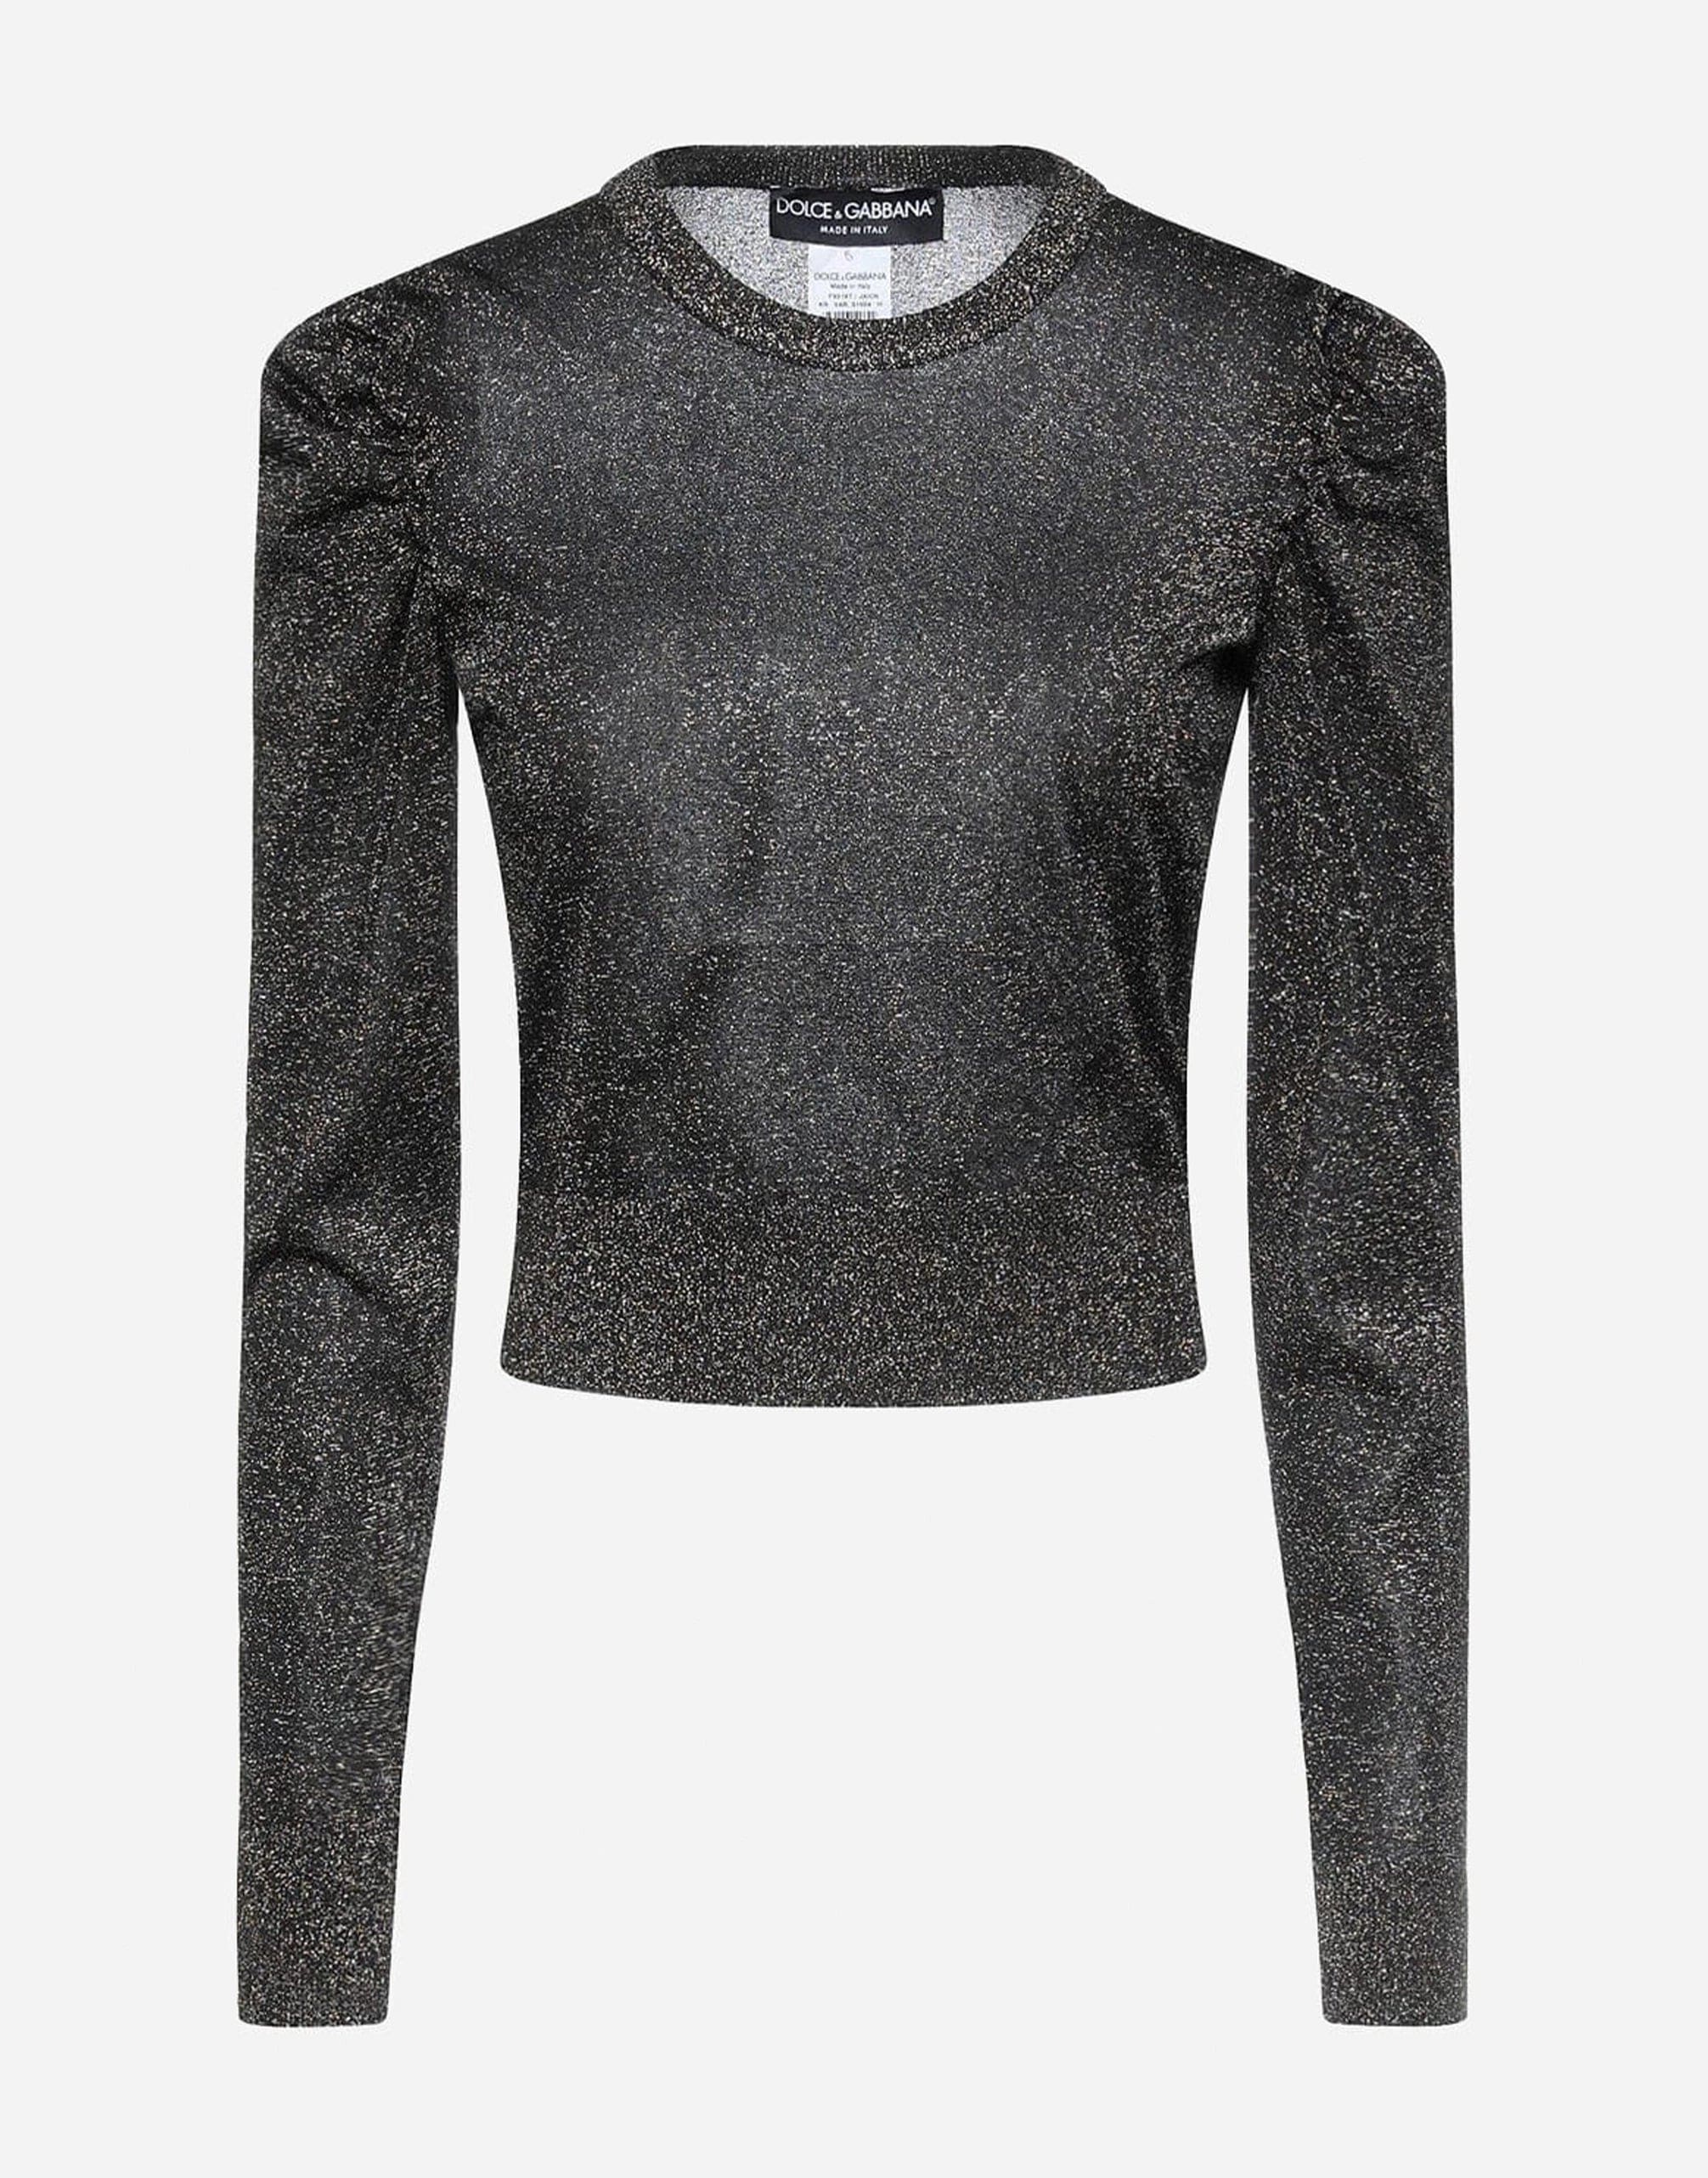 Dolce & Gabbana Cropped Sweater